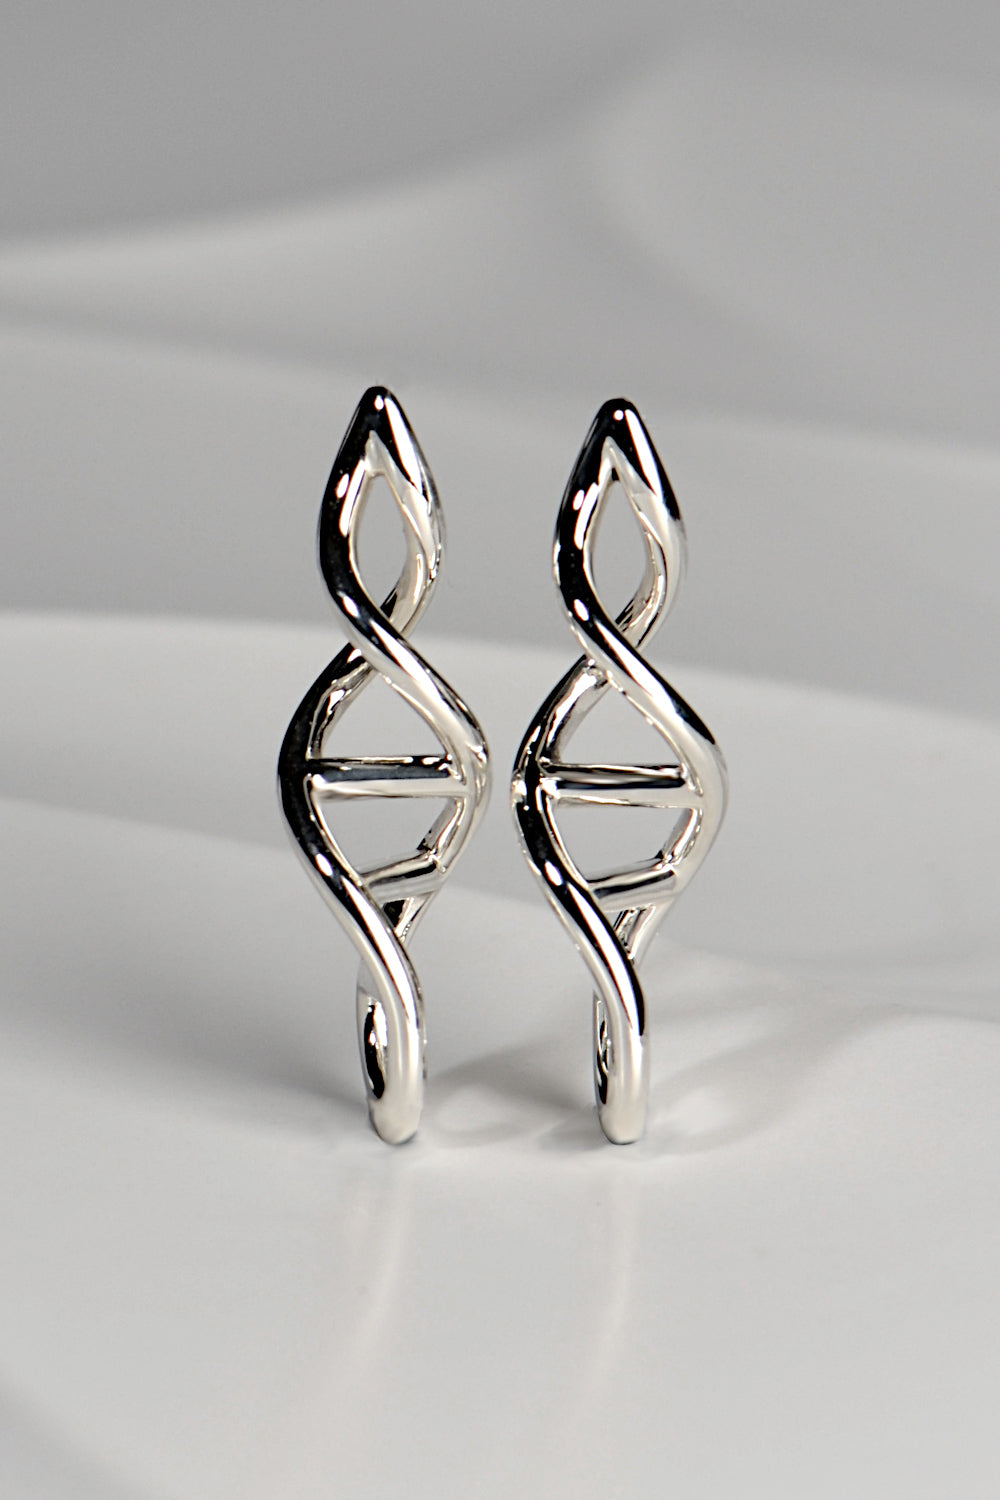 Designer Genes handmade earrings